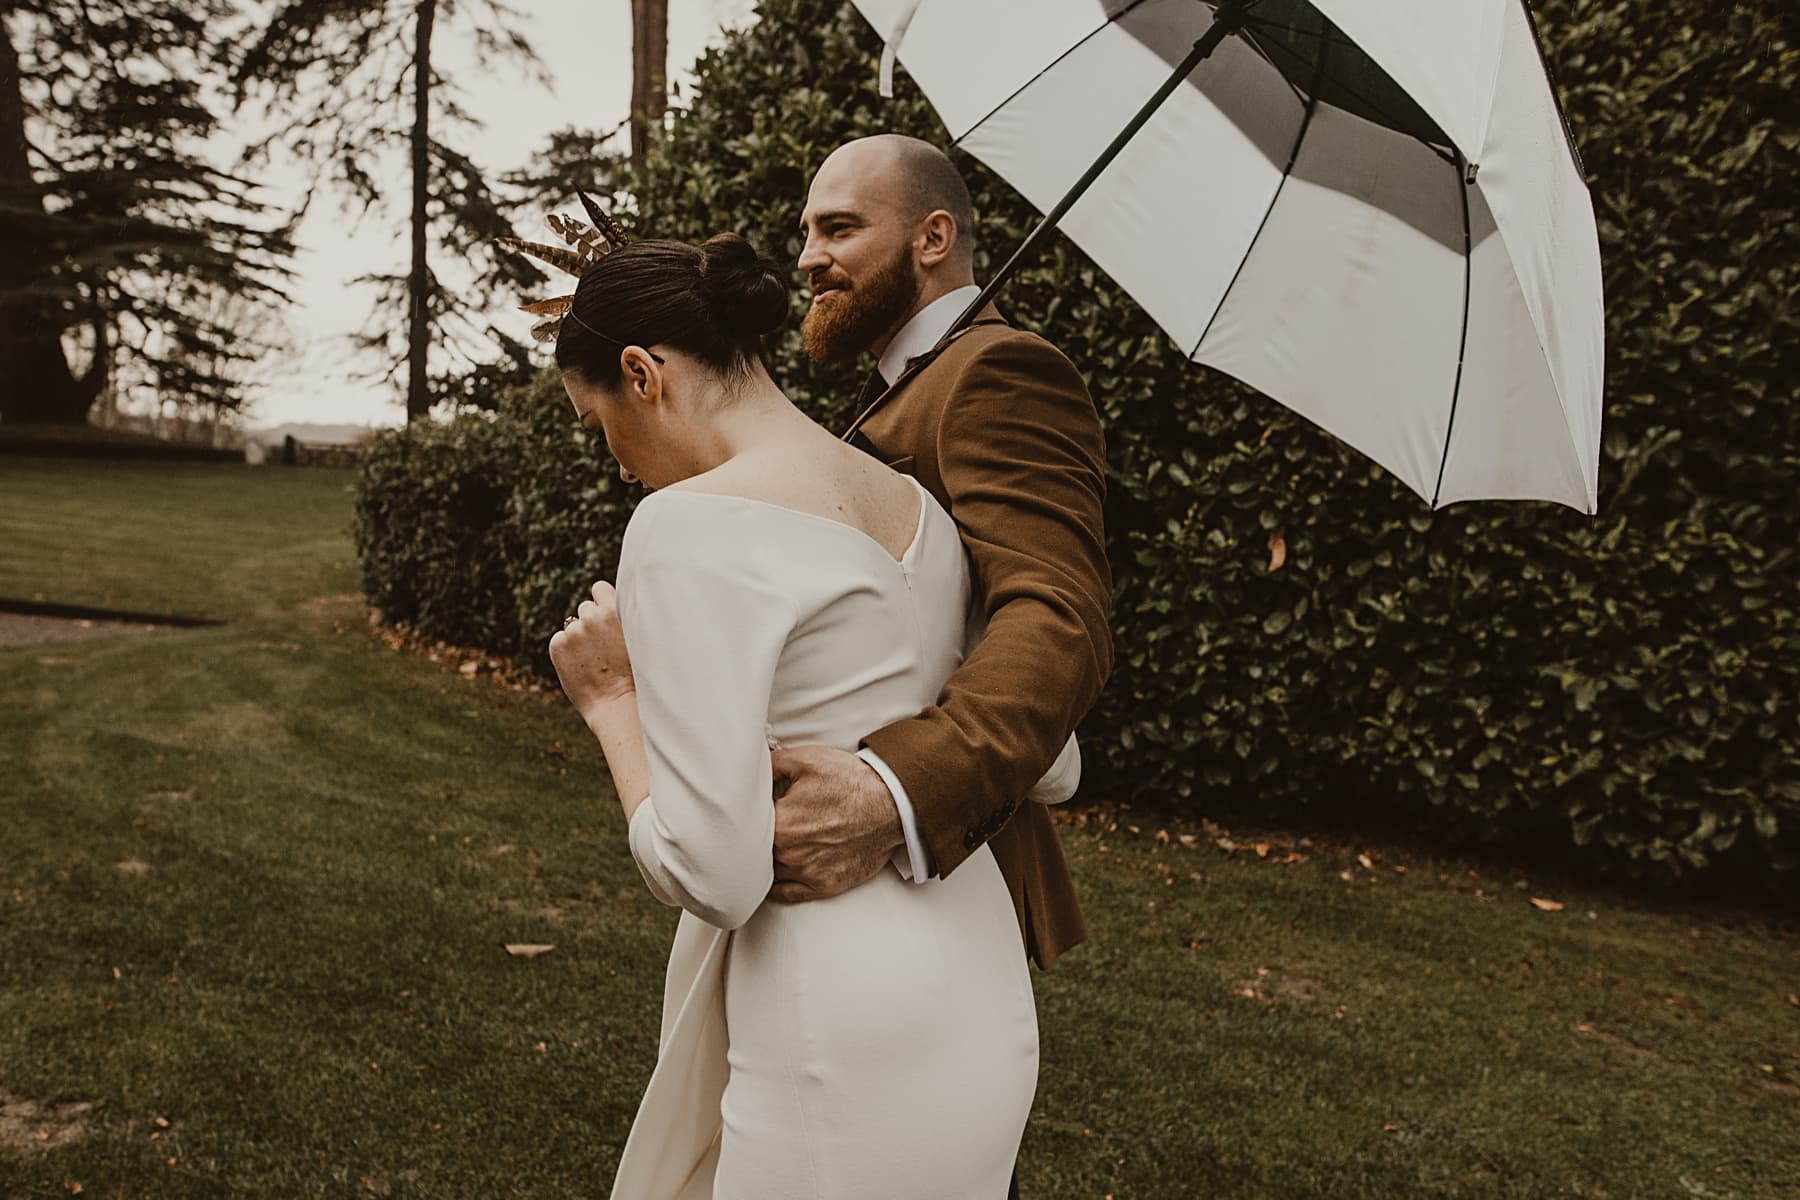 Couple walking with umbrella